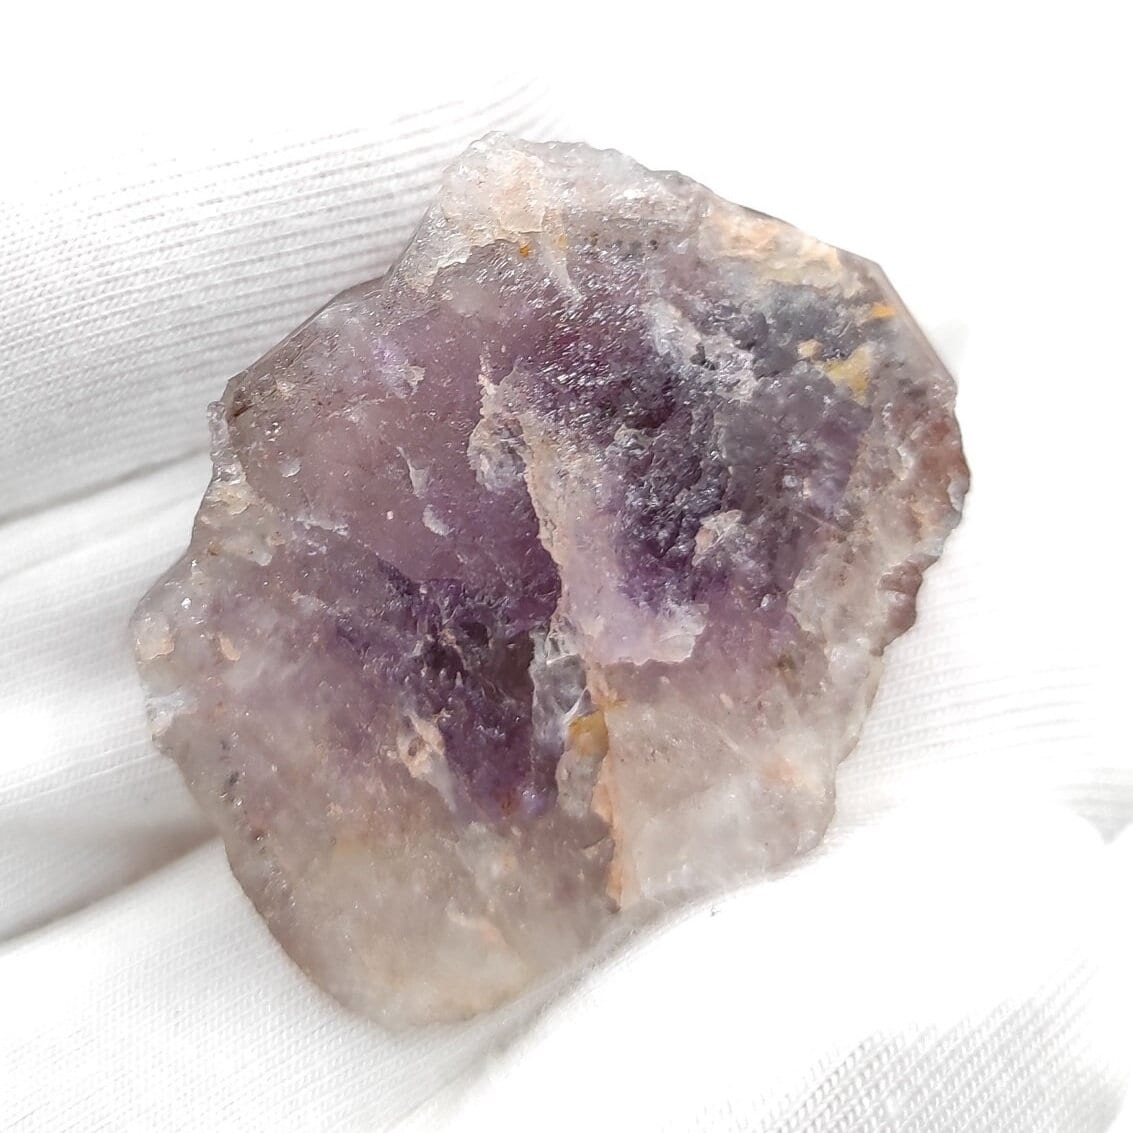 13g Mini Thunder Bay Amethyst - Hematite Amethyst - Canadian Amethyst Crystal - Hematite Included - Mini Small Pocket Crystals